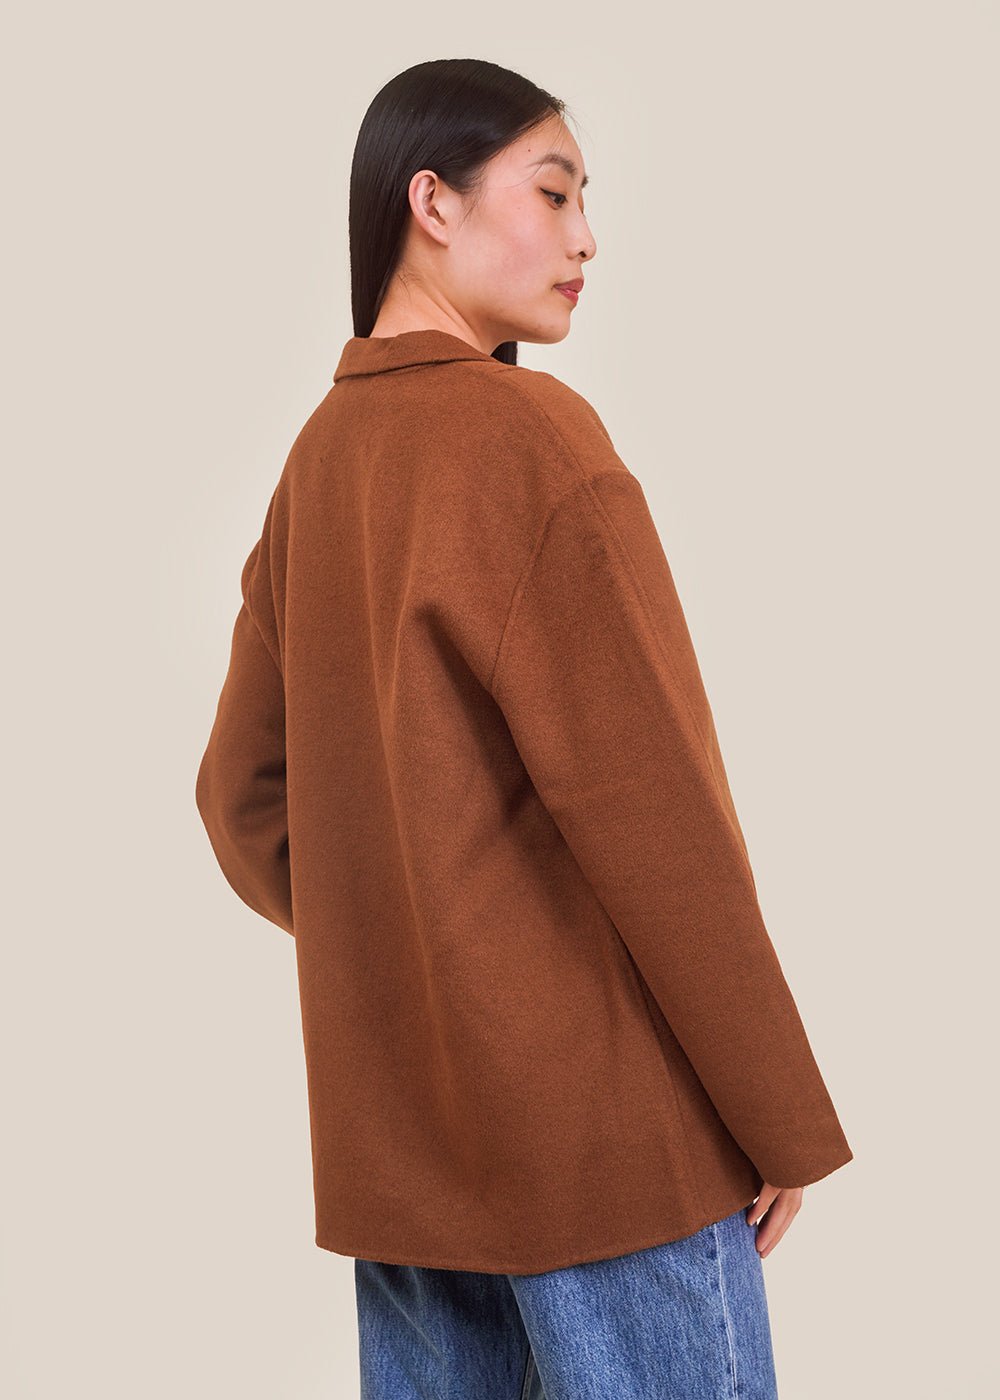 Stylein Deep Camel Tibro Jacket - New Classics Studios Sustainable Ethical Fashion Canada